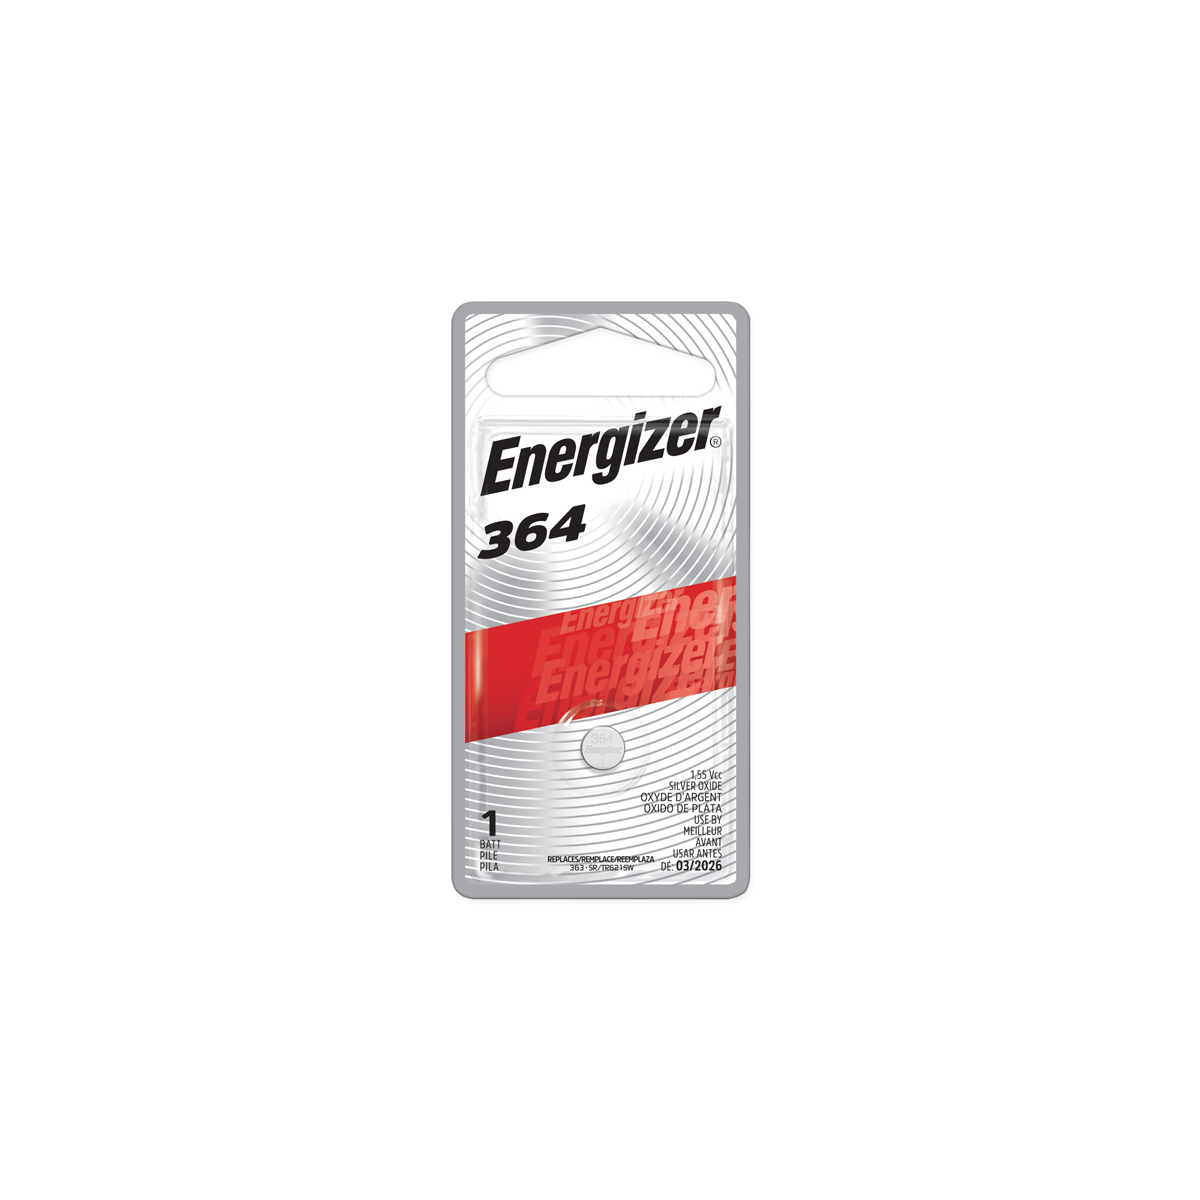 Energizer Silver Oxide Watch Battery 364/363 (1pk)